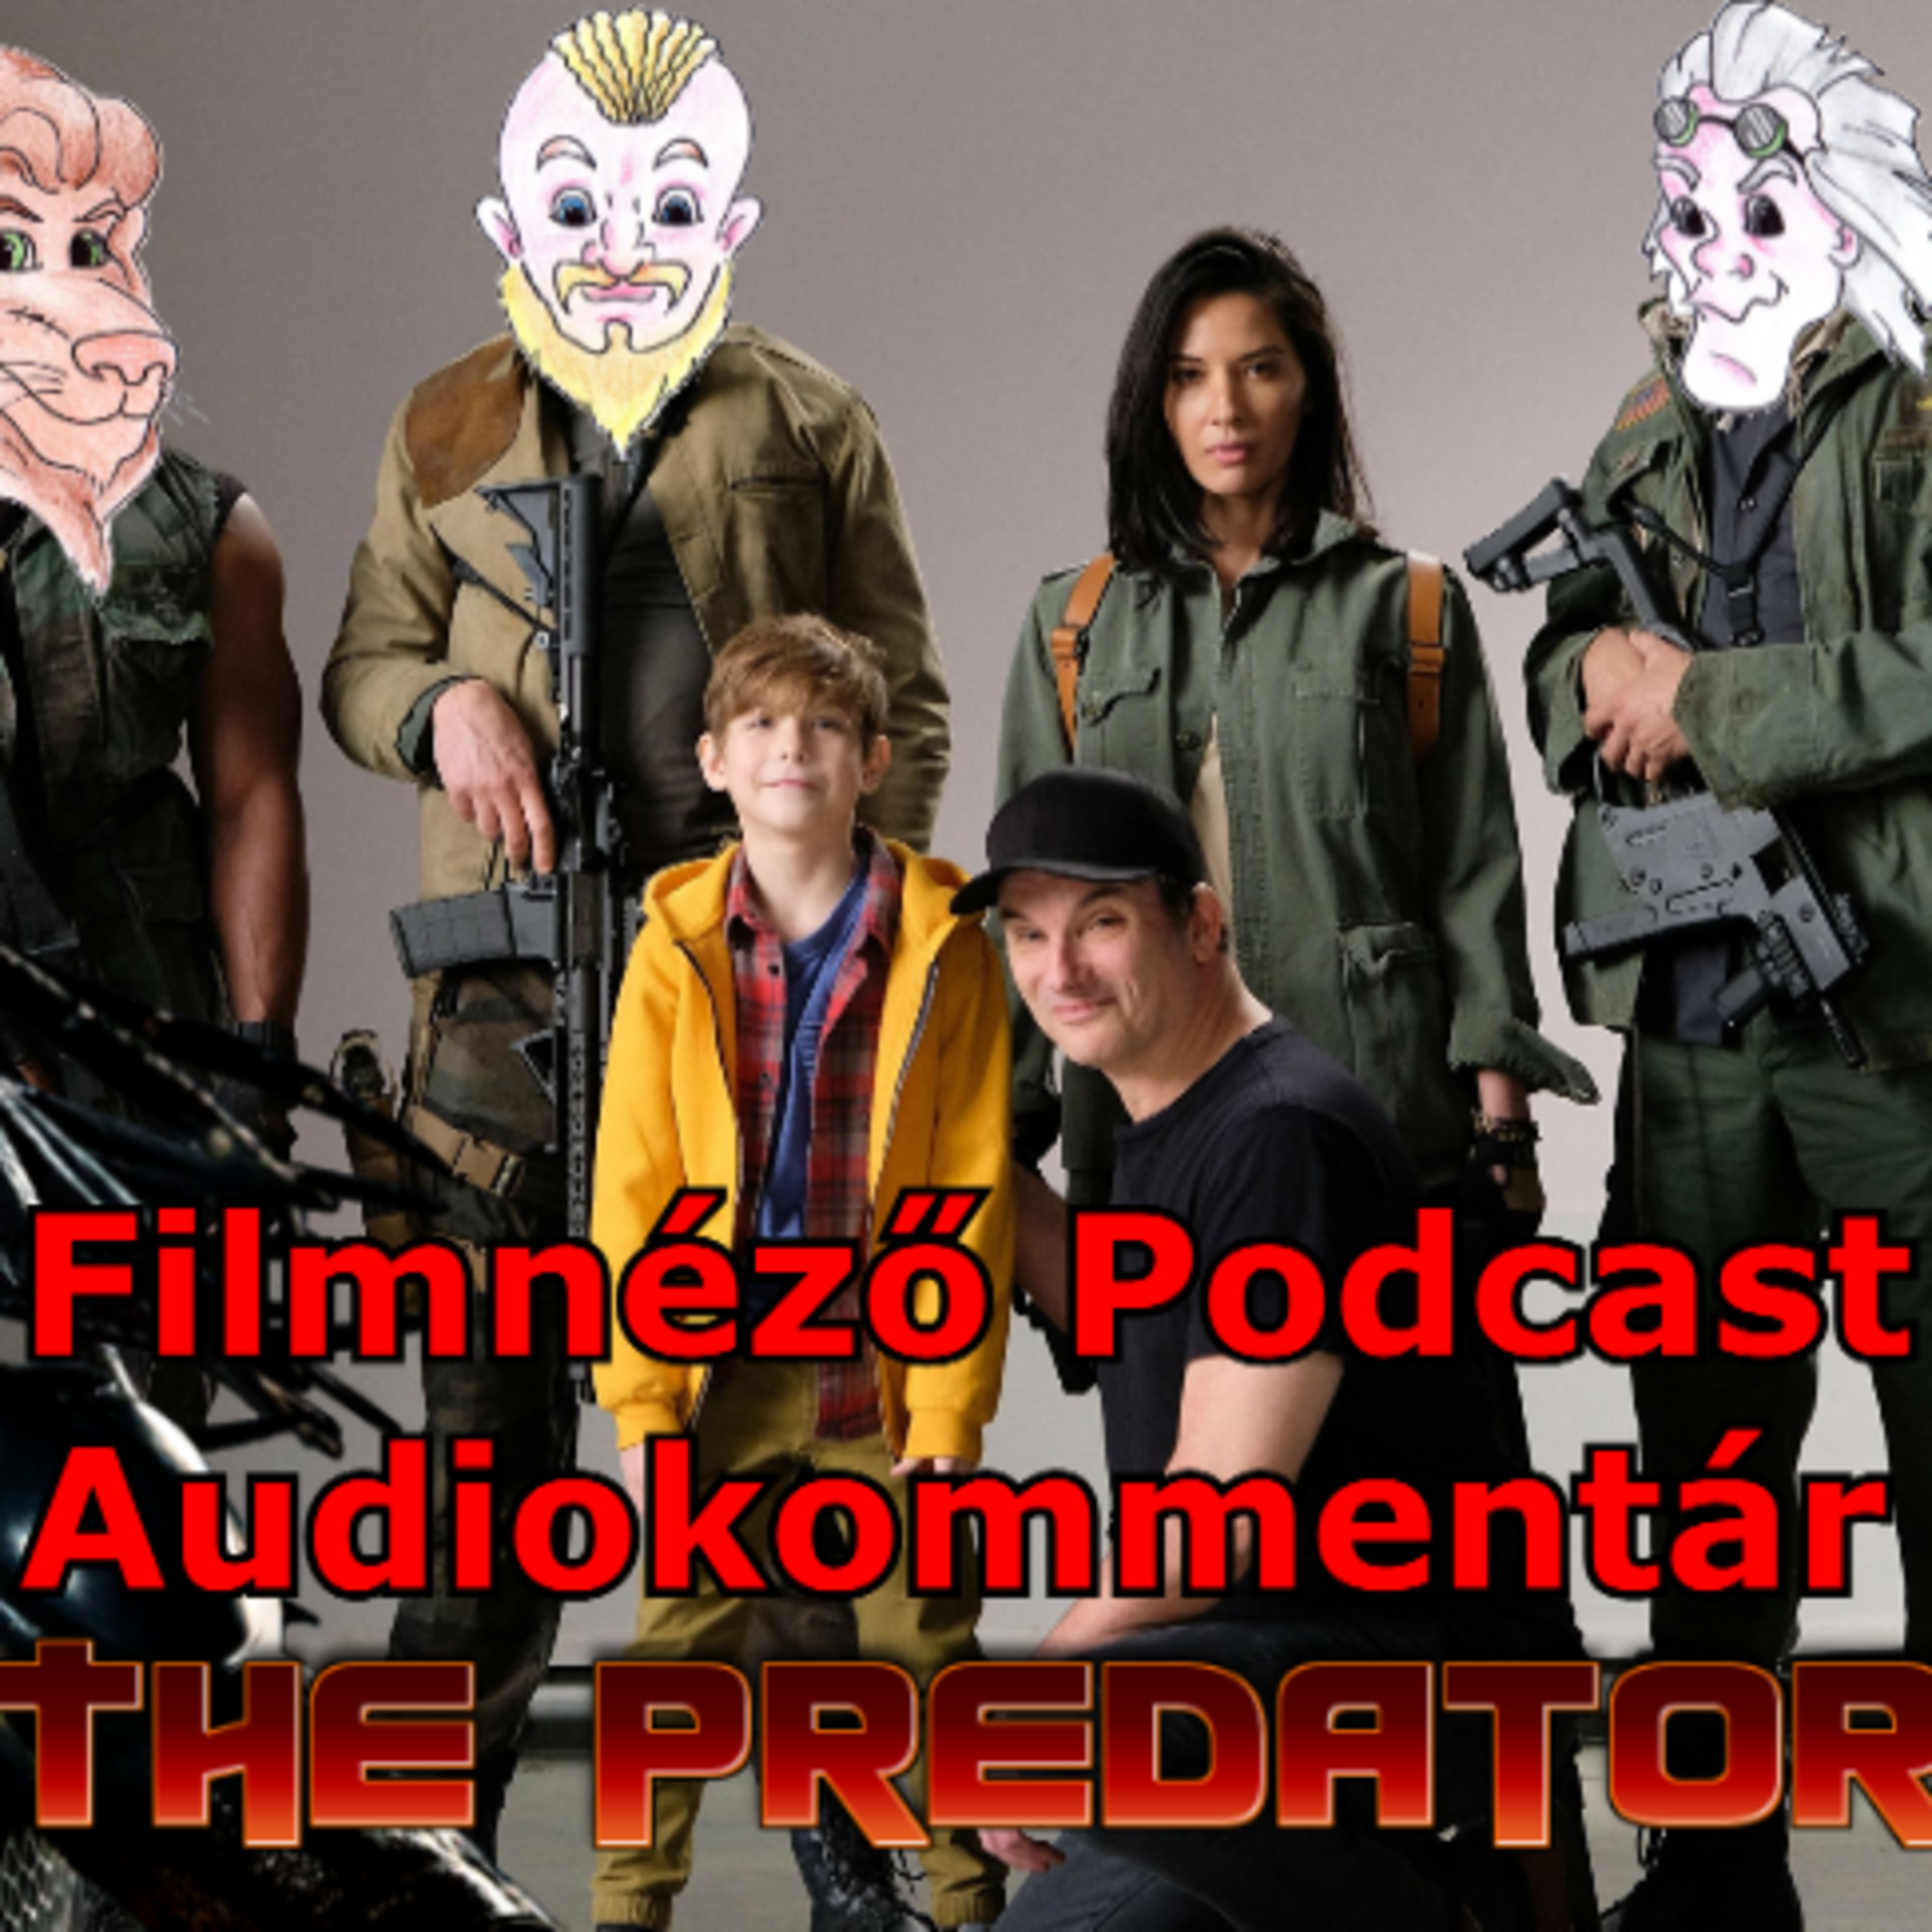 Filmnéző Audiokommentár: The Predator - A Ragadozó